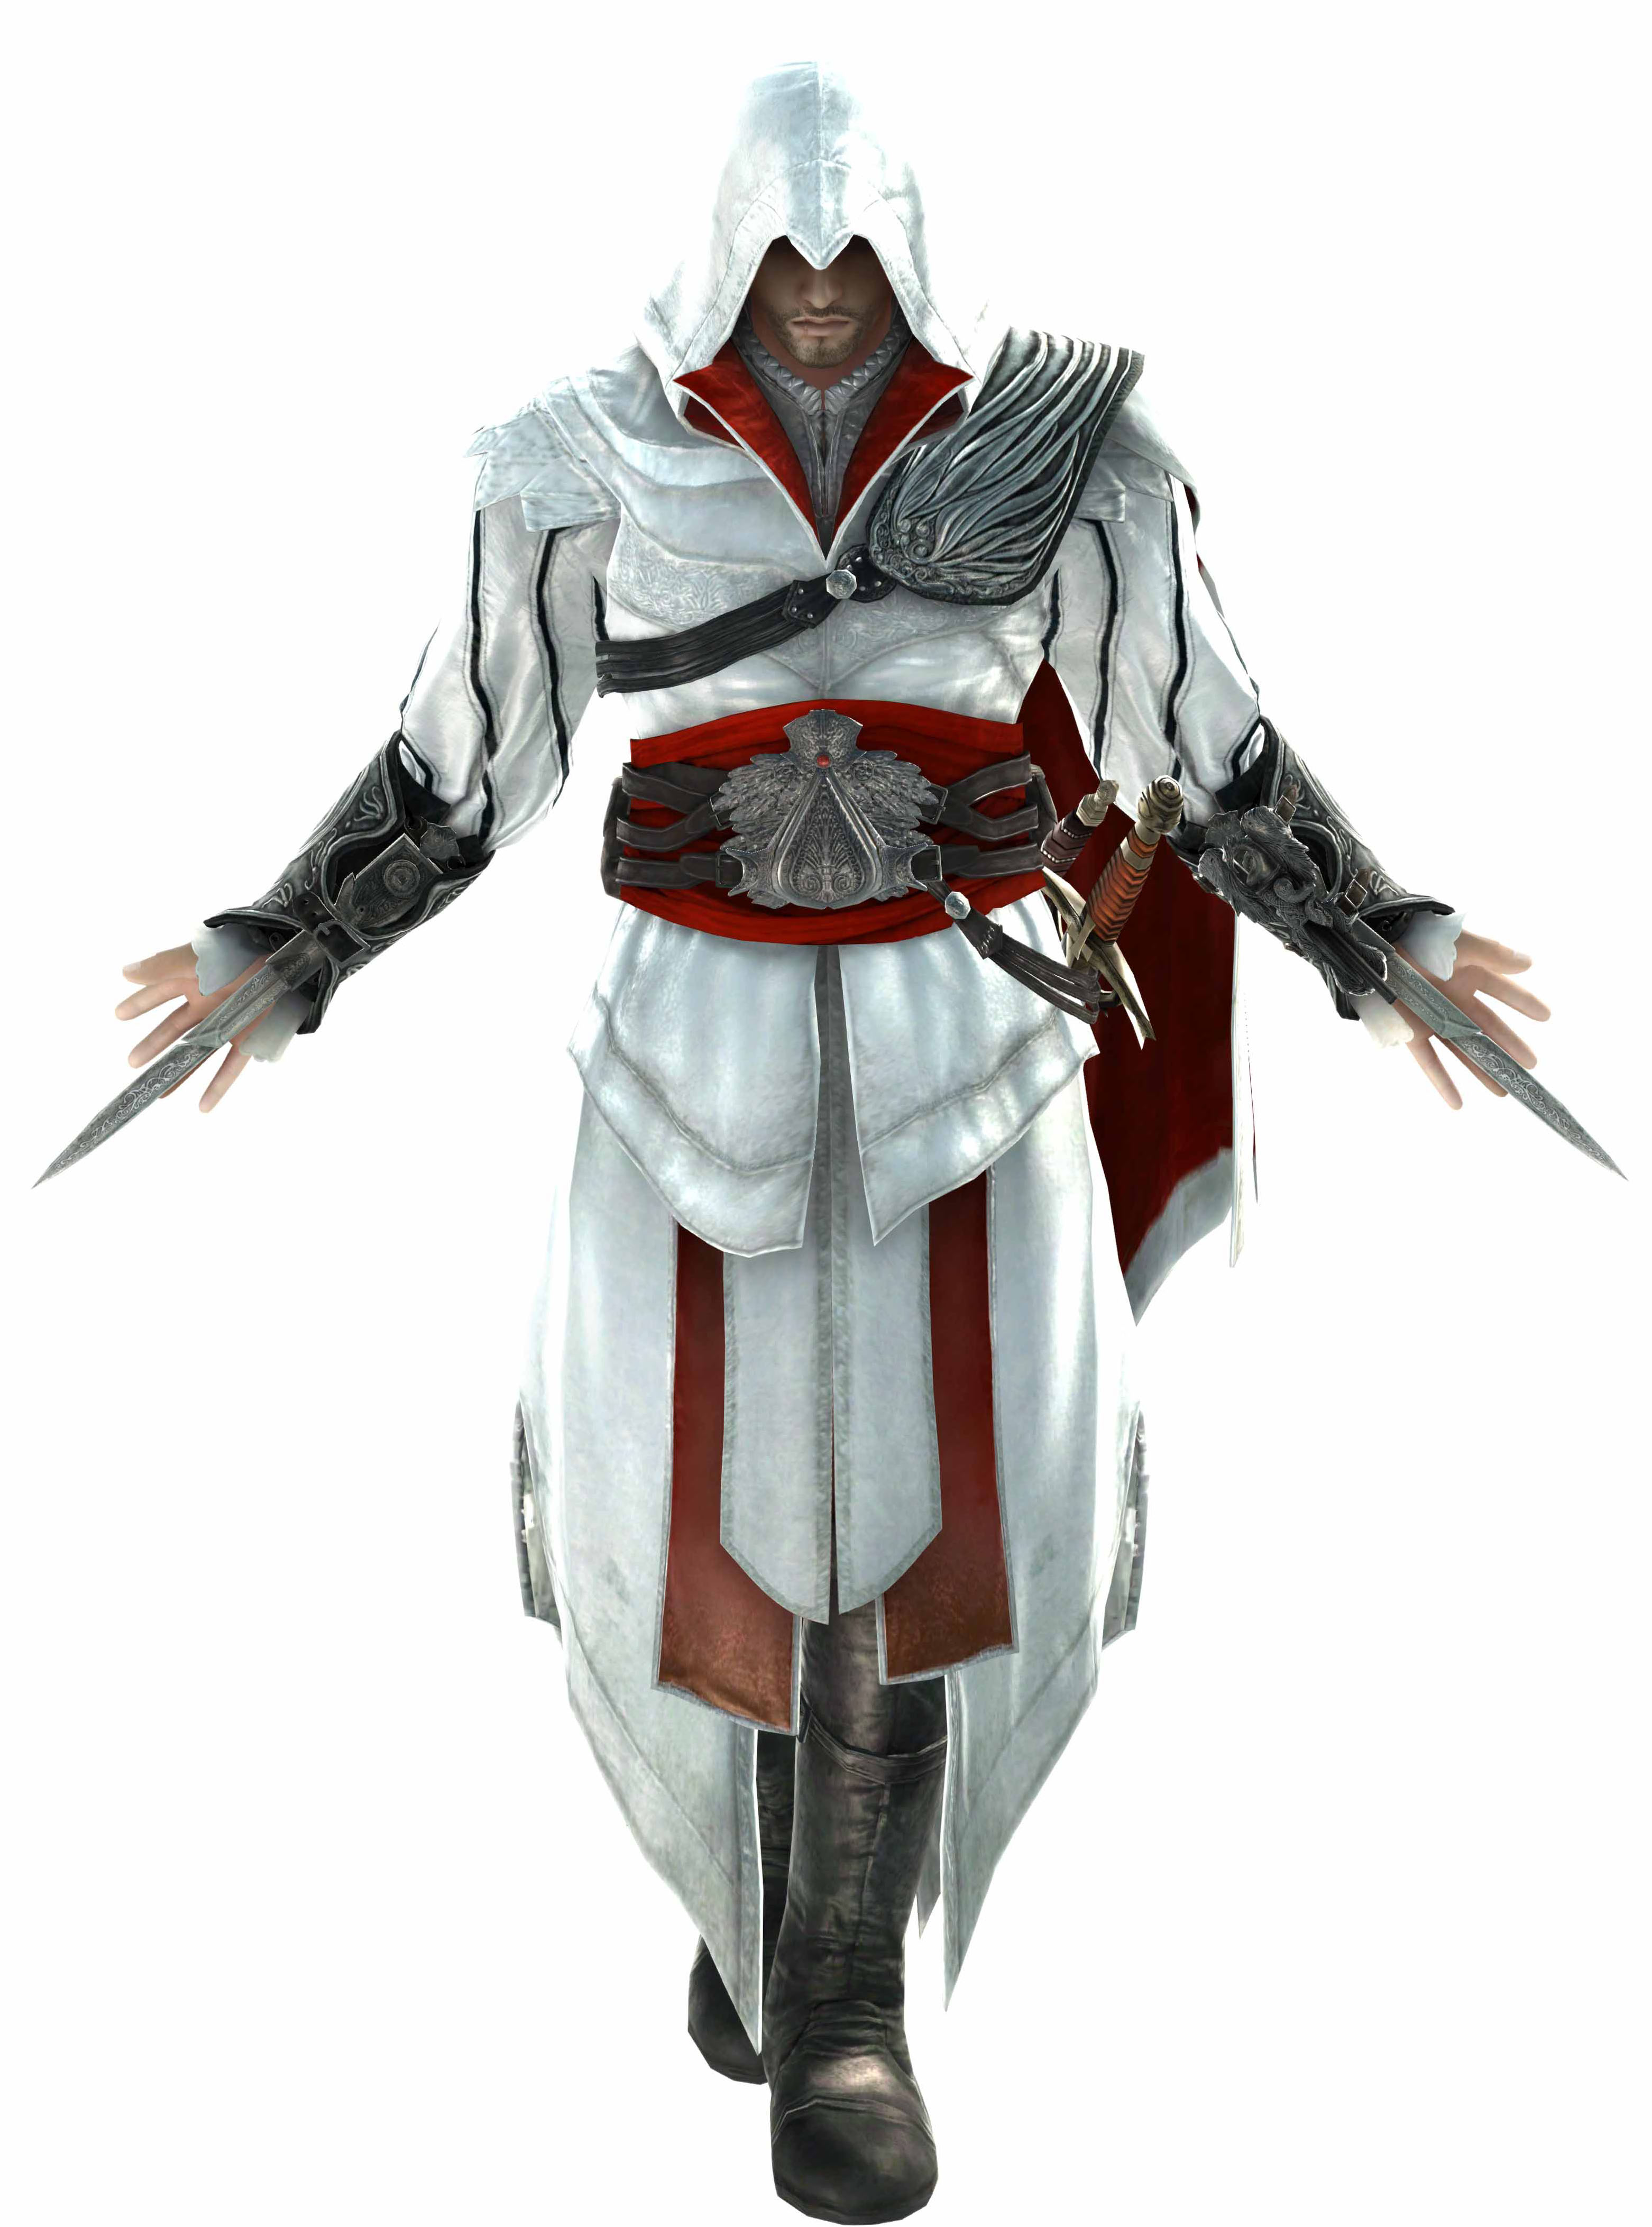 Ezio Auditore da Firenze from Assassin's Creed - Game Art3124 x 4211